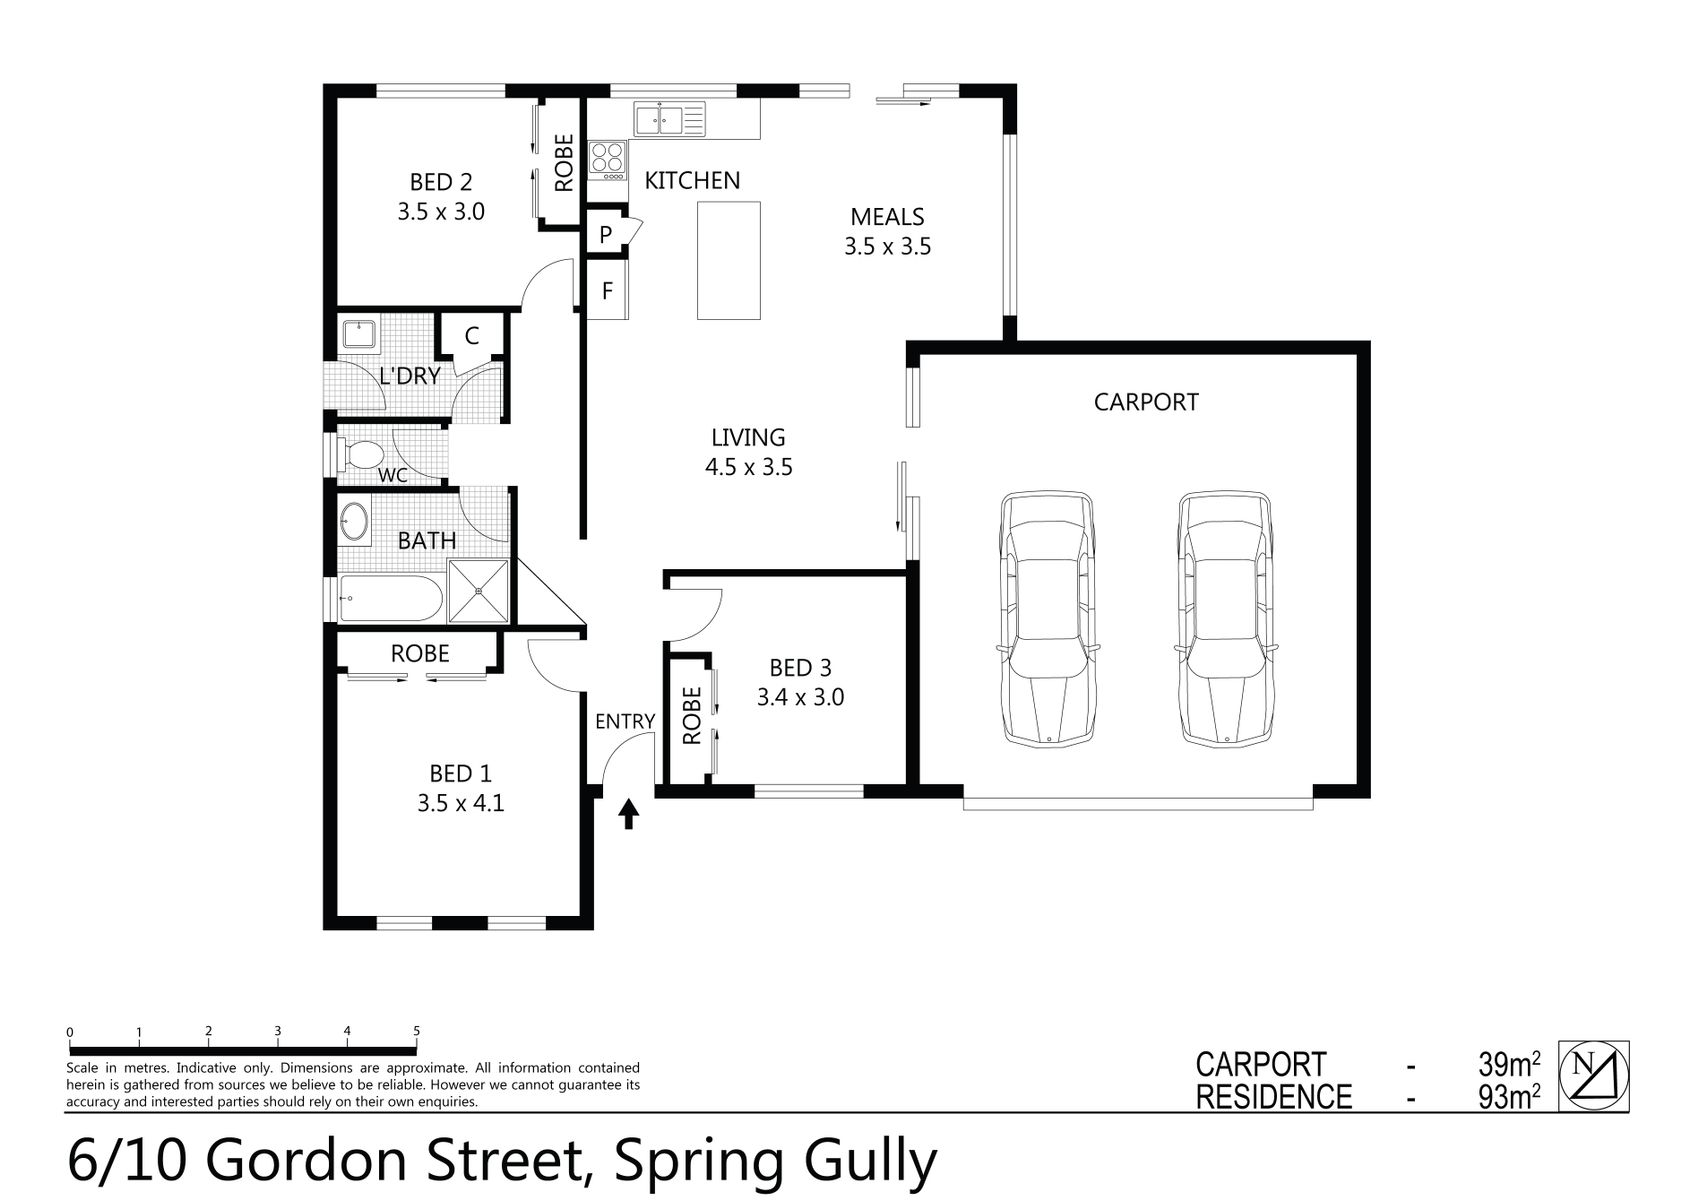 6 10 Gordon Street, Spring Gully (05 September 2018) 93 sqm